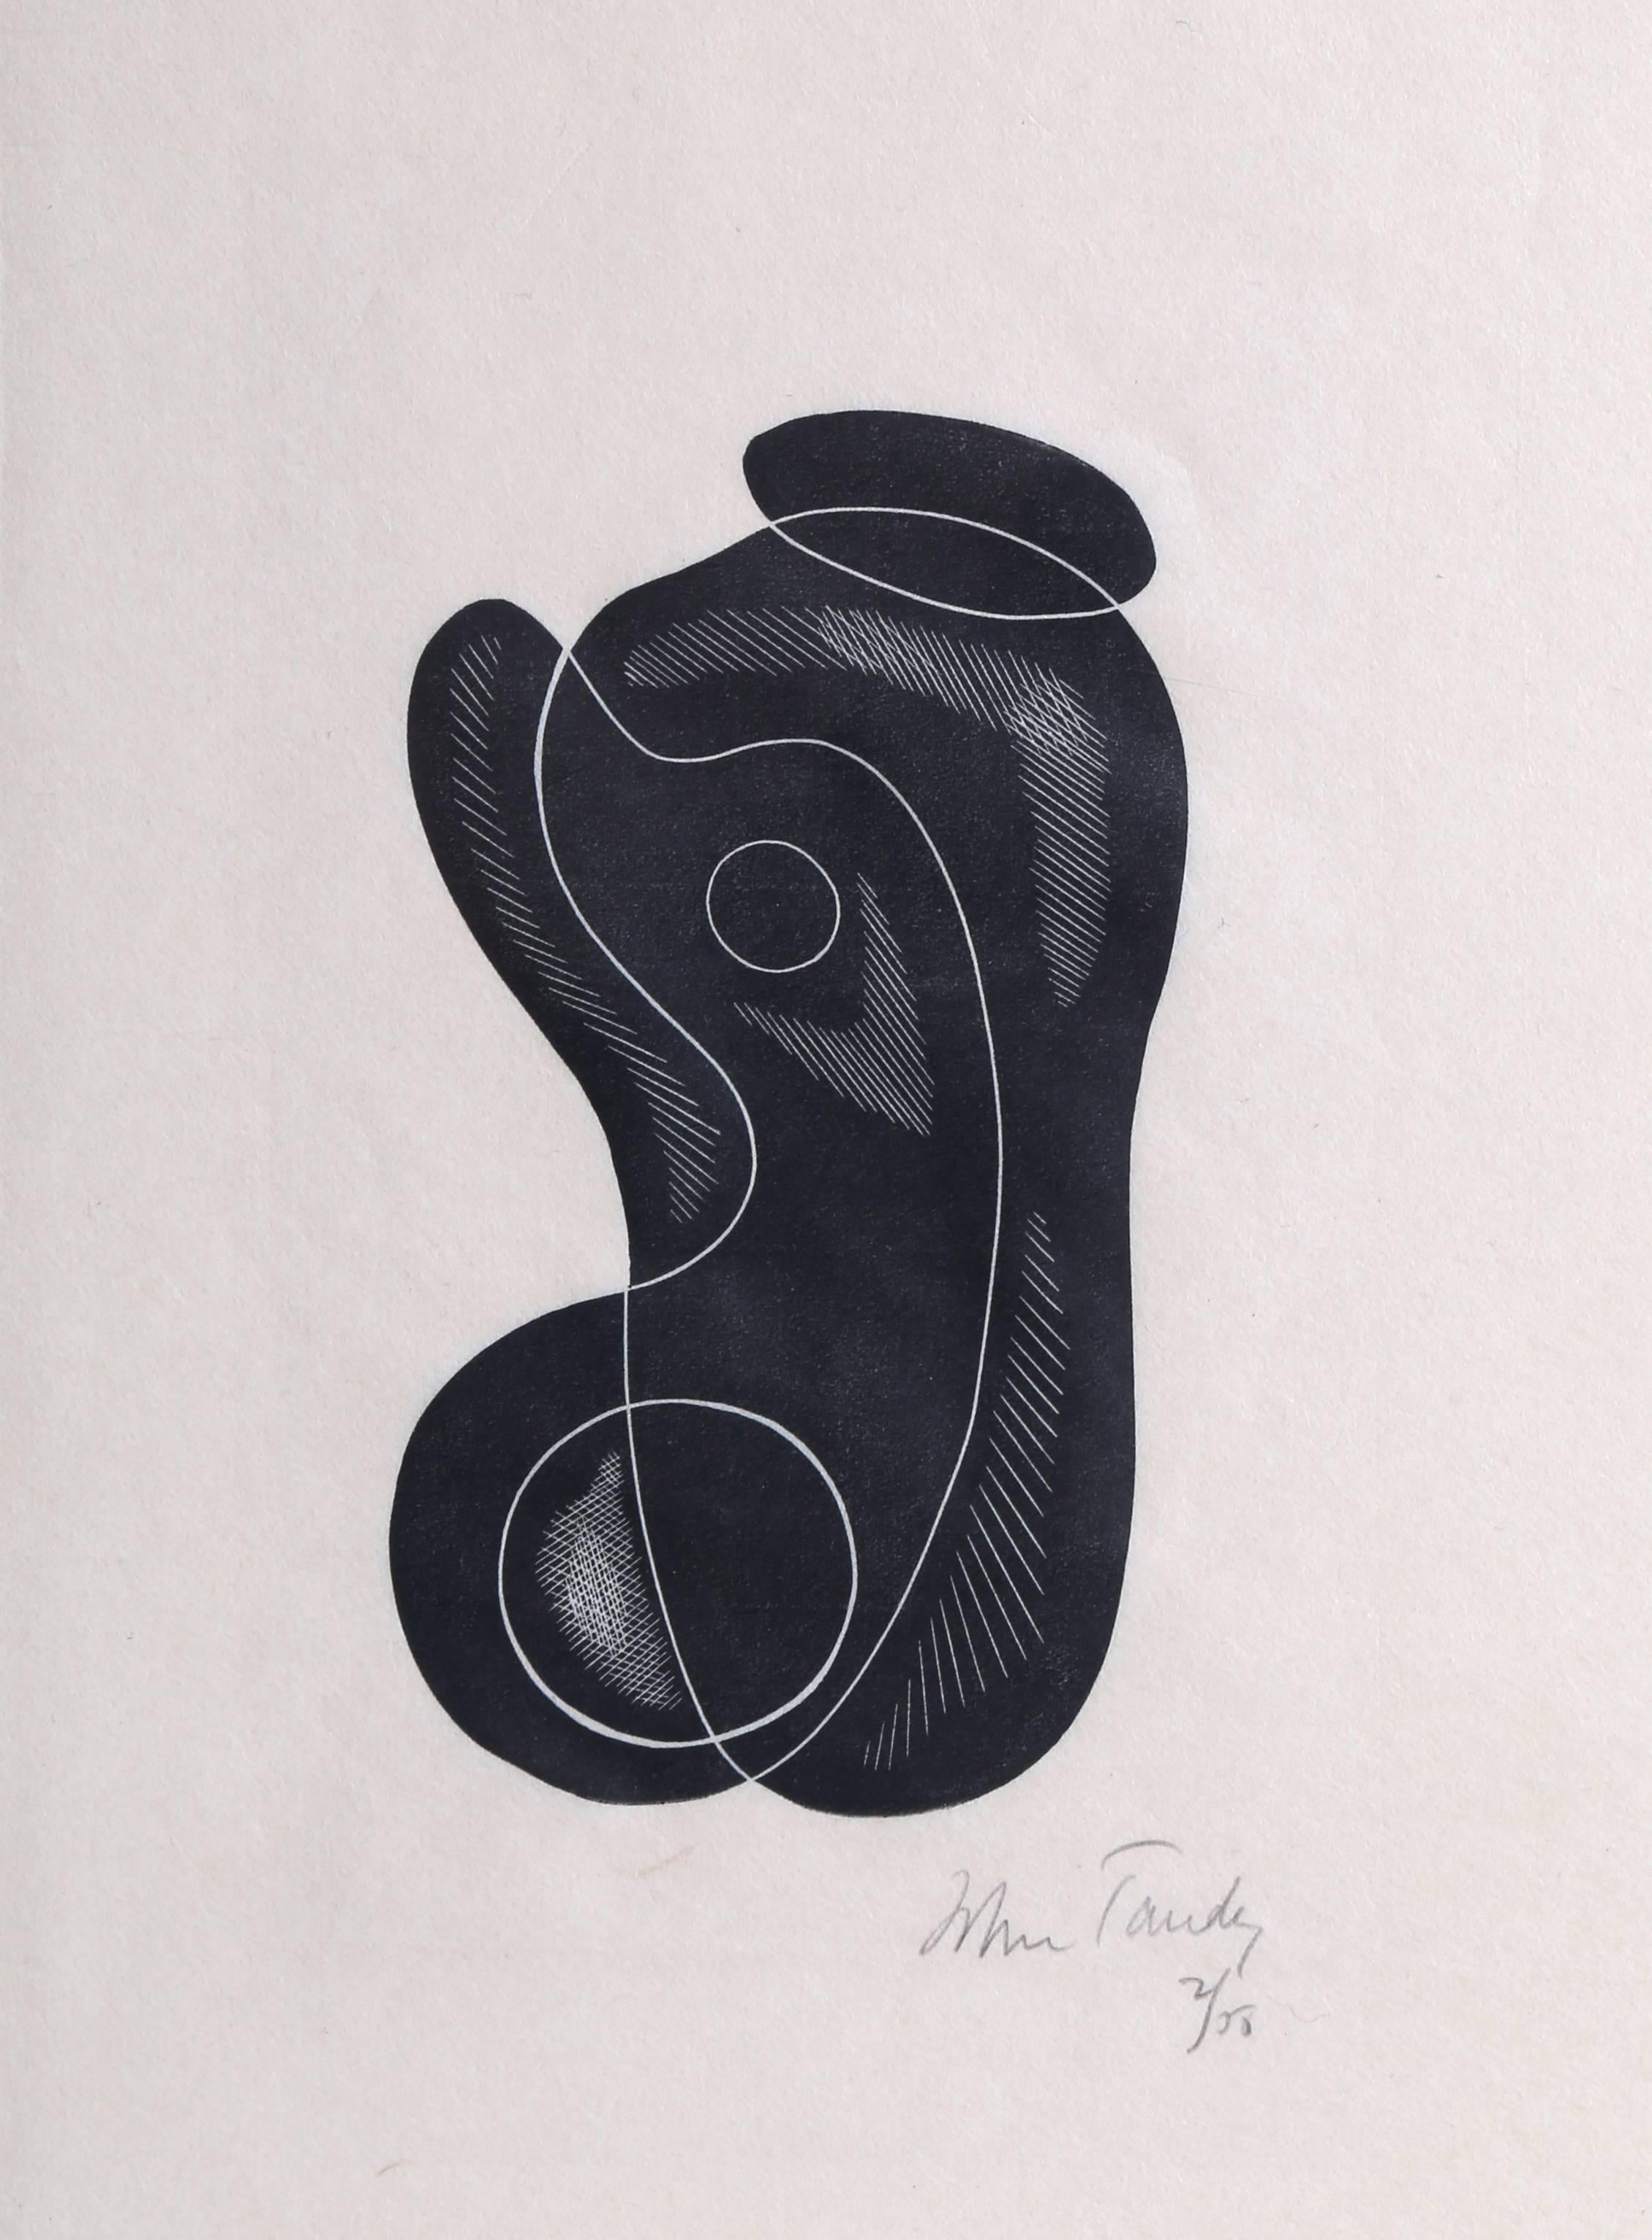 Tableau moderne abstrait de John Tandy vers 1928